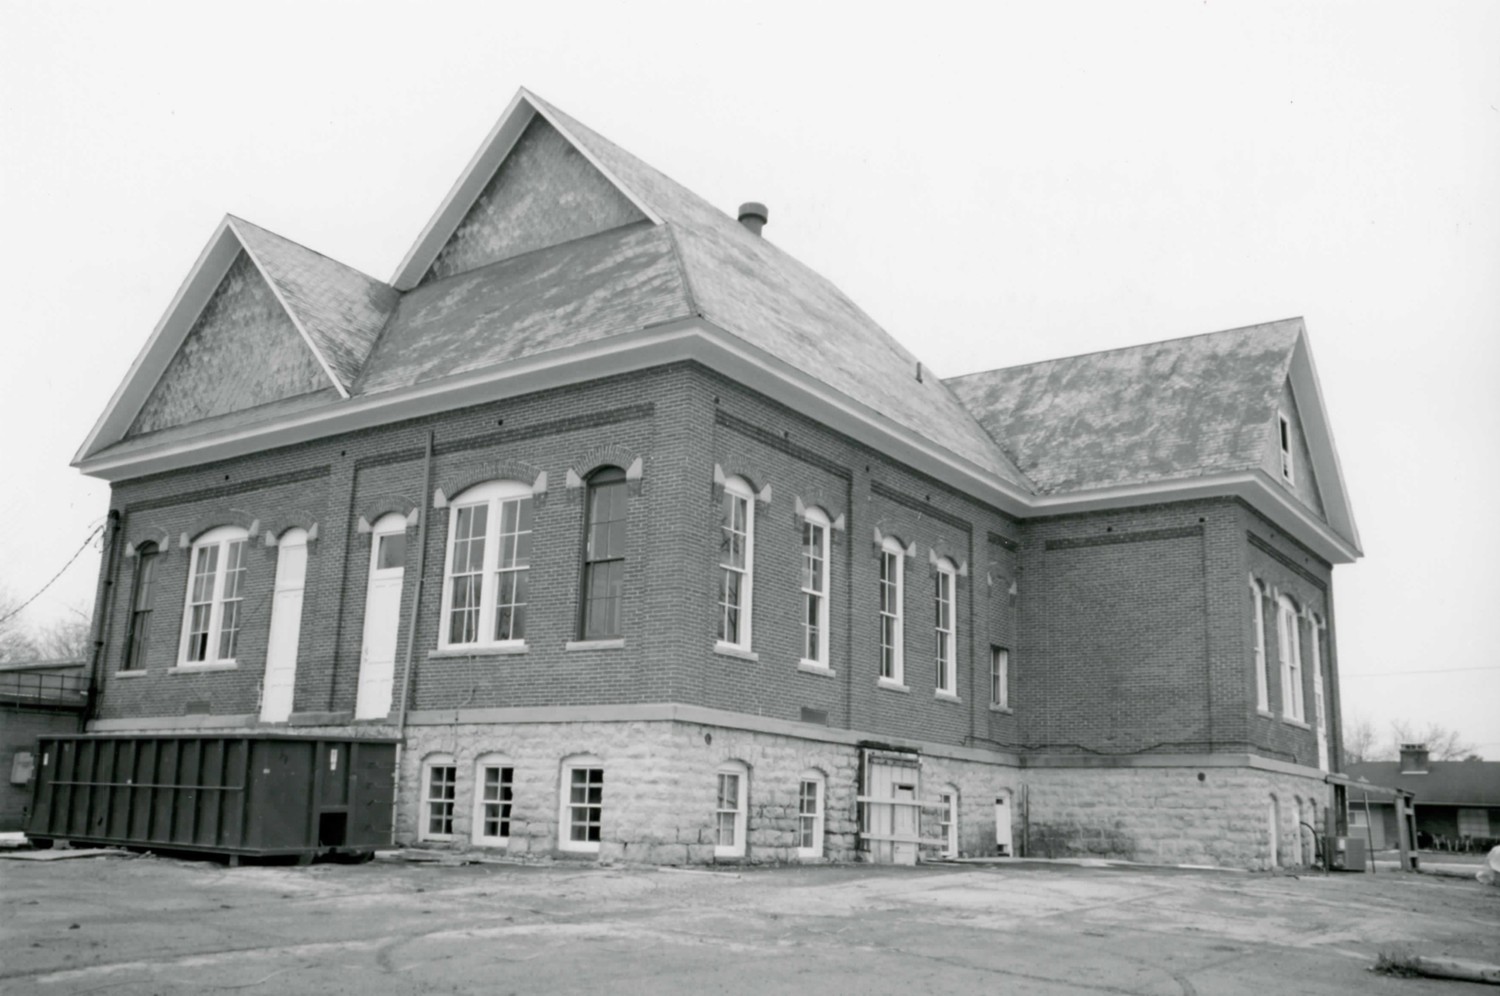 Adams Elementary School, Findlay Ohio Northwest elevation (2003)